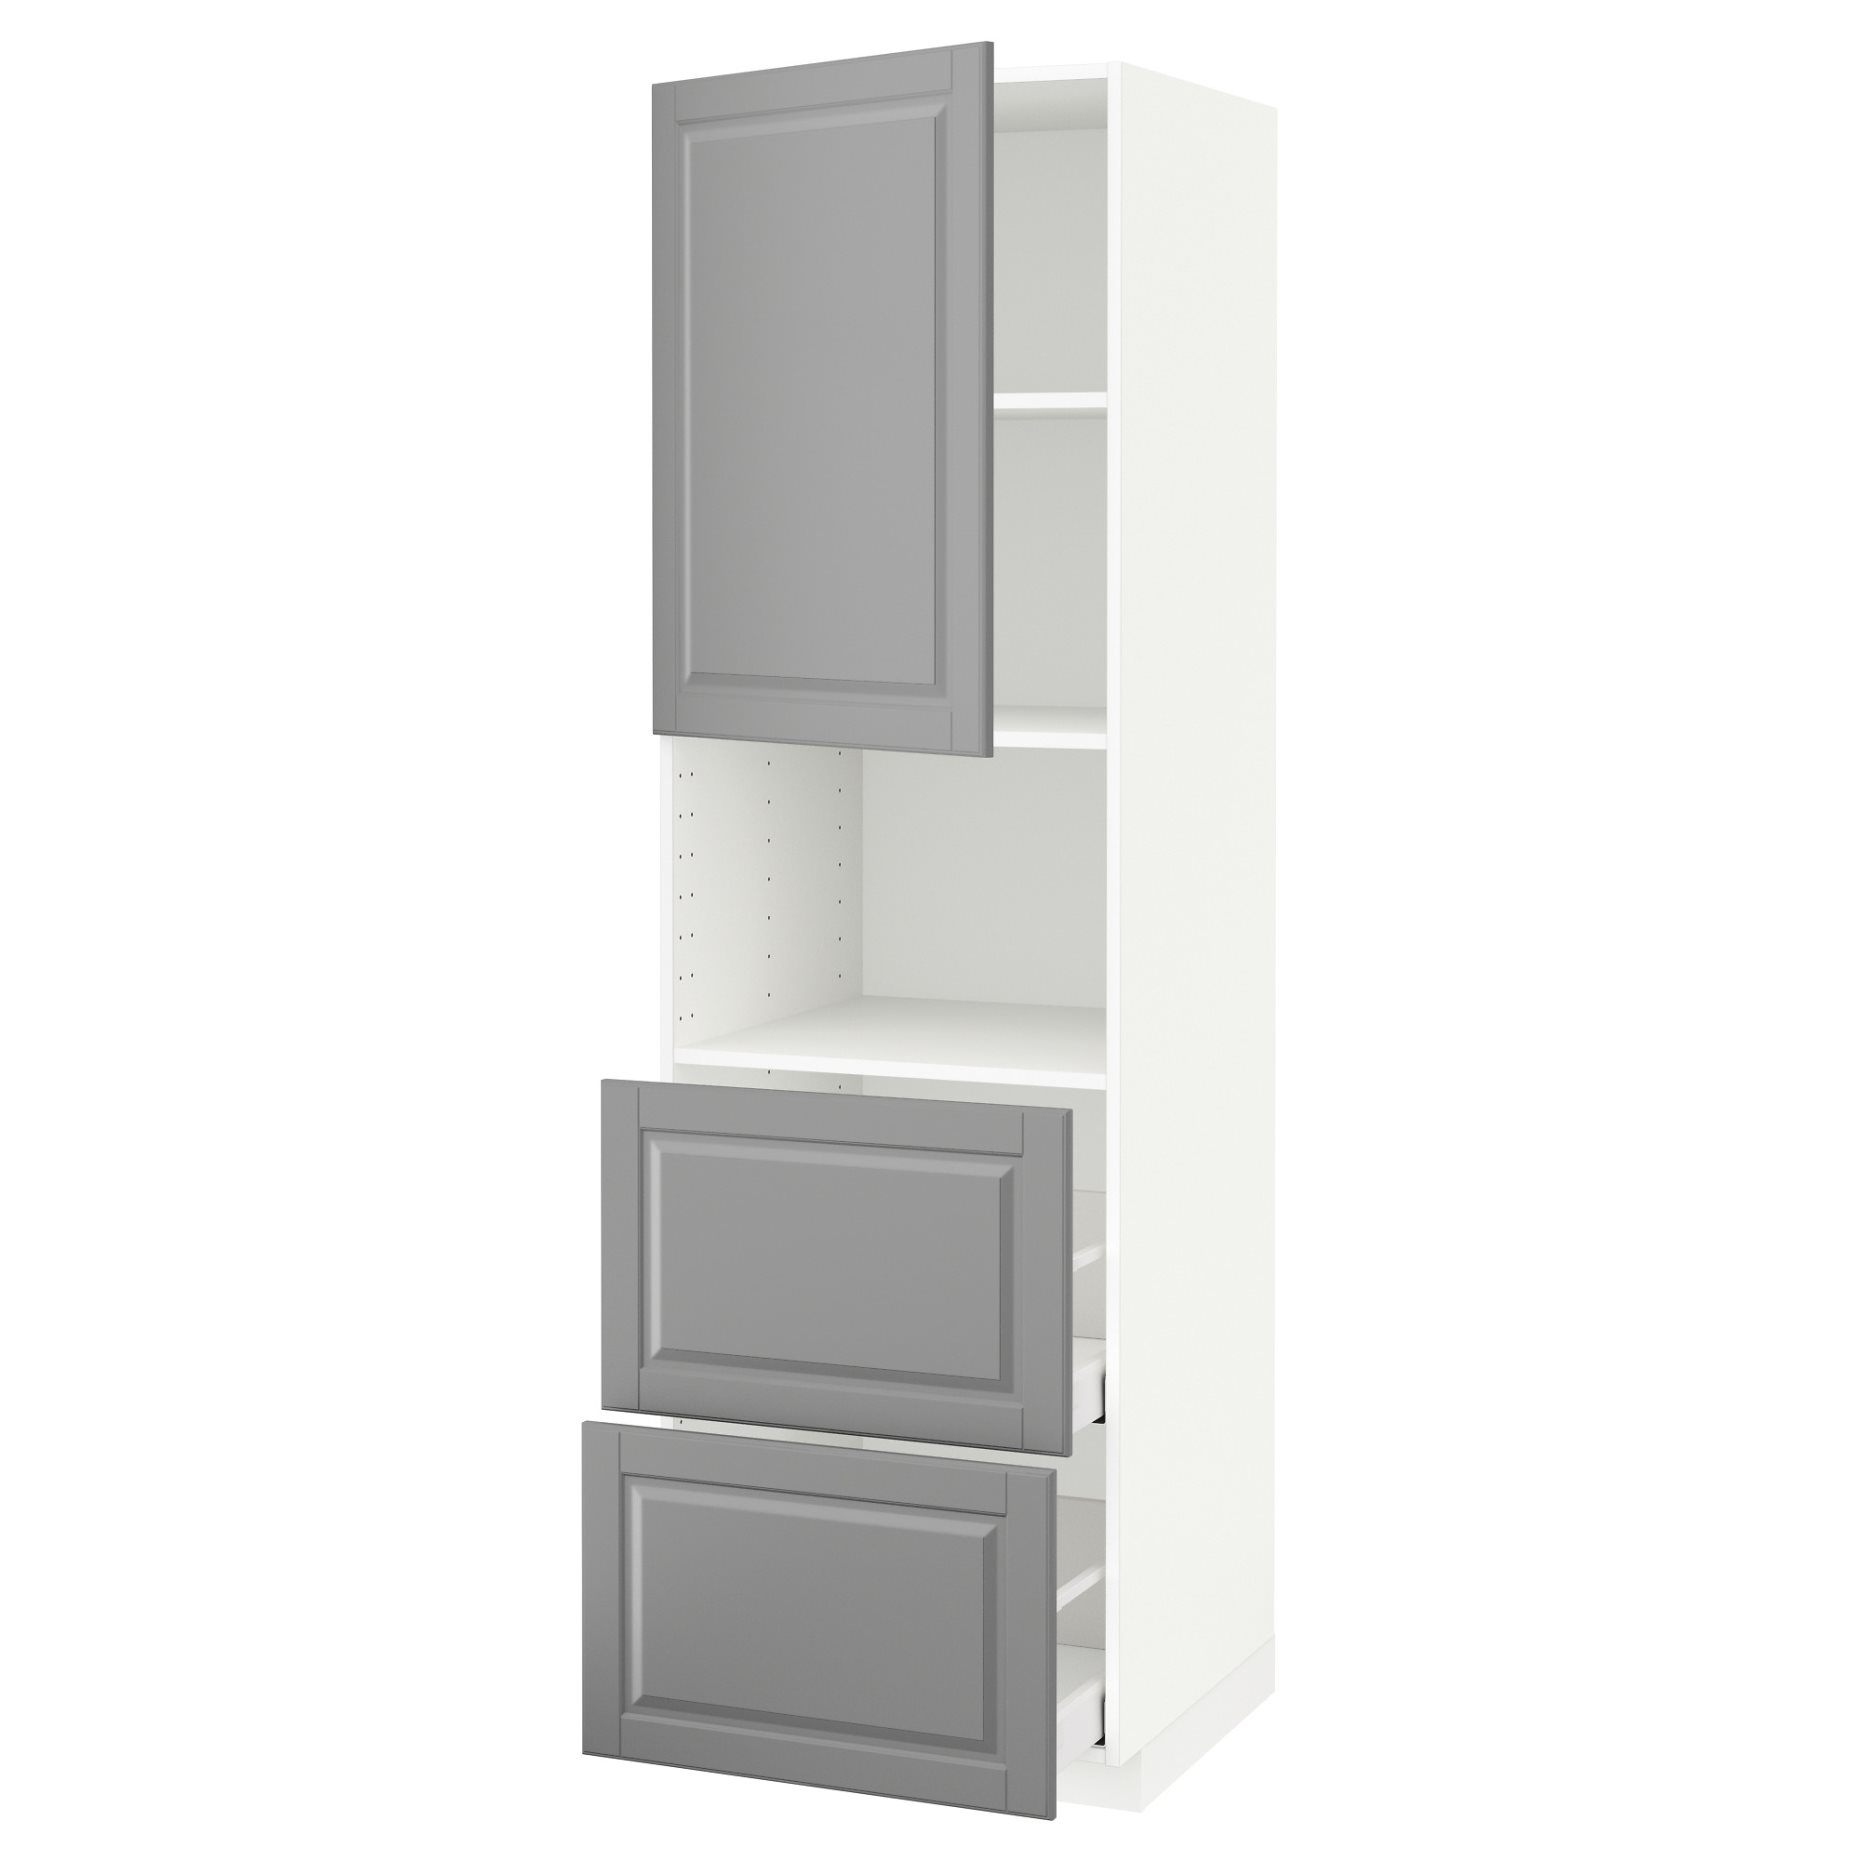 METOD/MAXIMERA, ψηλό ντουλάπι για φούρνο μικρoκυμάτων με πόρτα/2 συρτάρια, 60x60x200 cm, 694.691.51